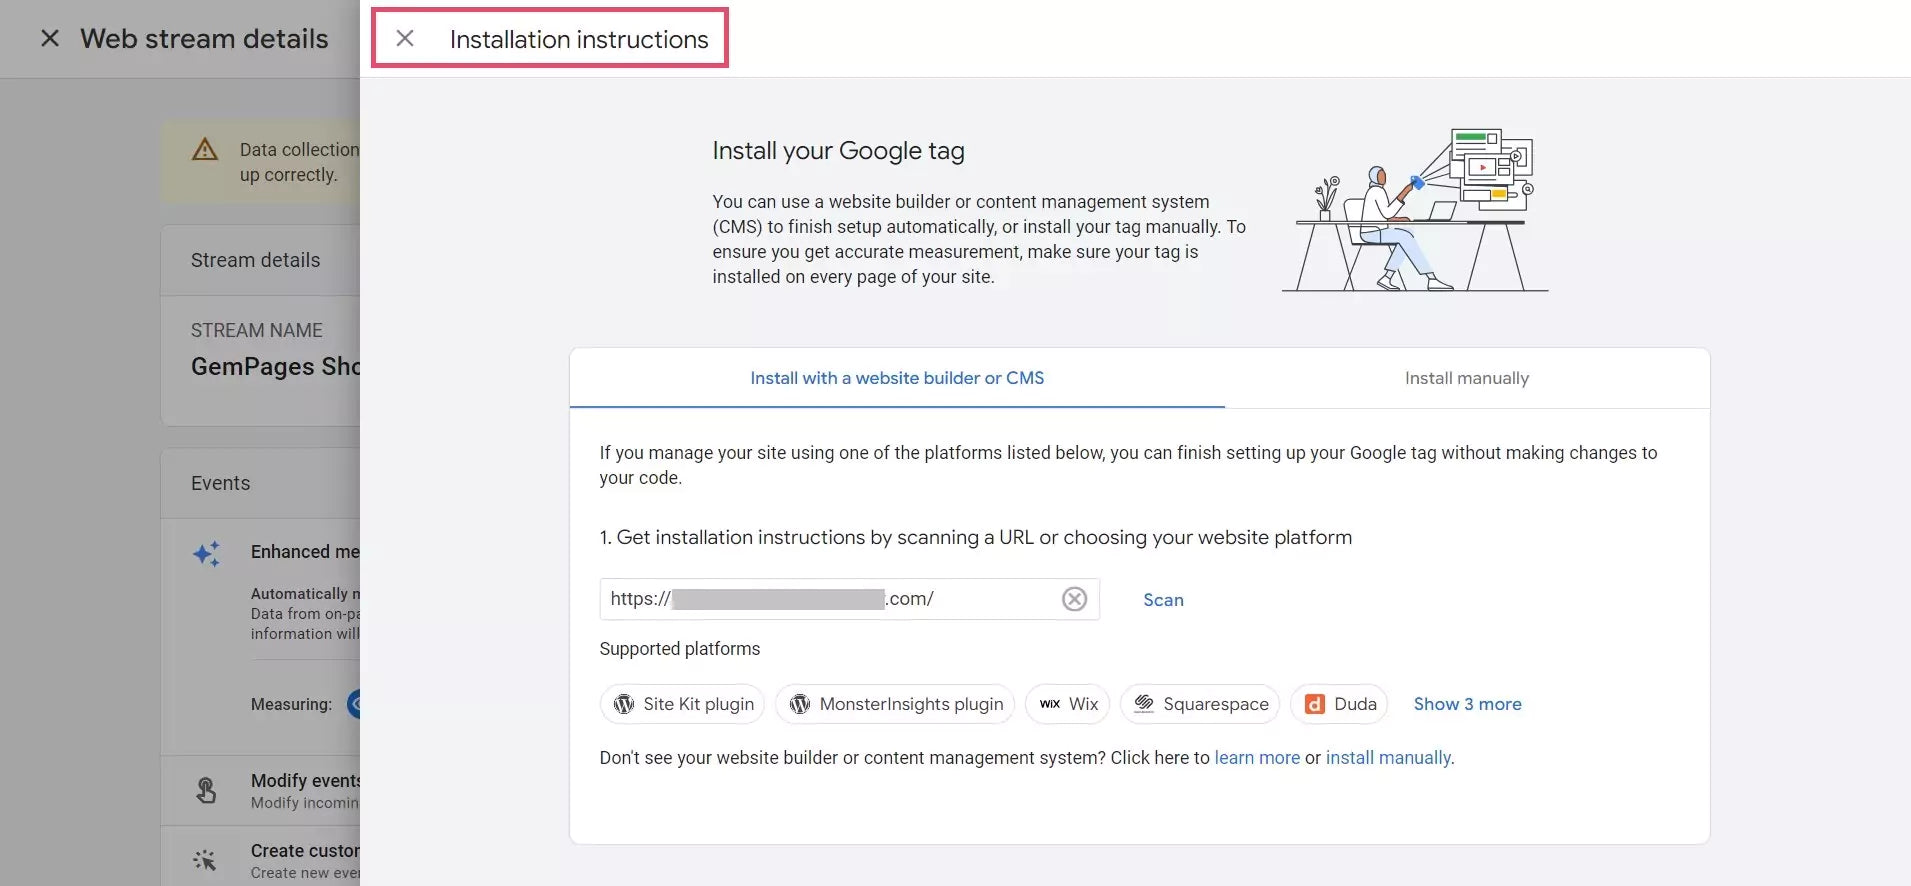 Google Analytics 4 - Installation instructions